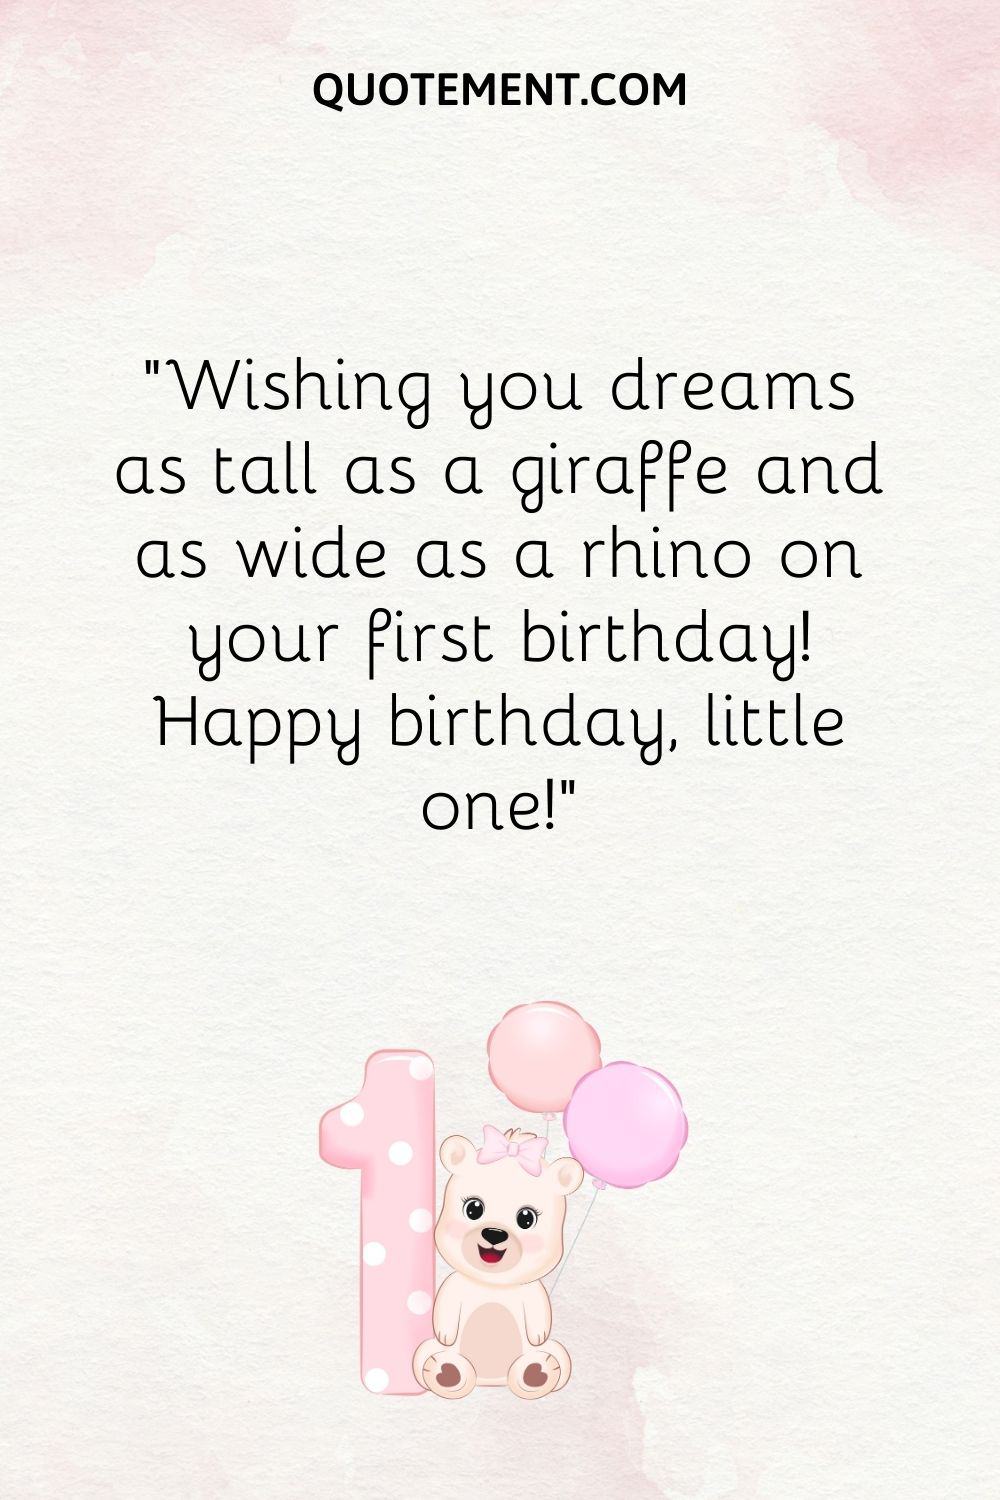 teddy bear illustration representing happy birthday little girl wish